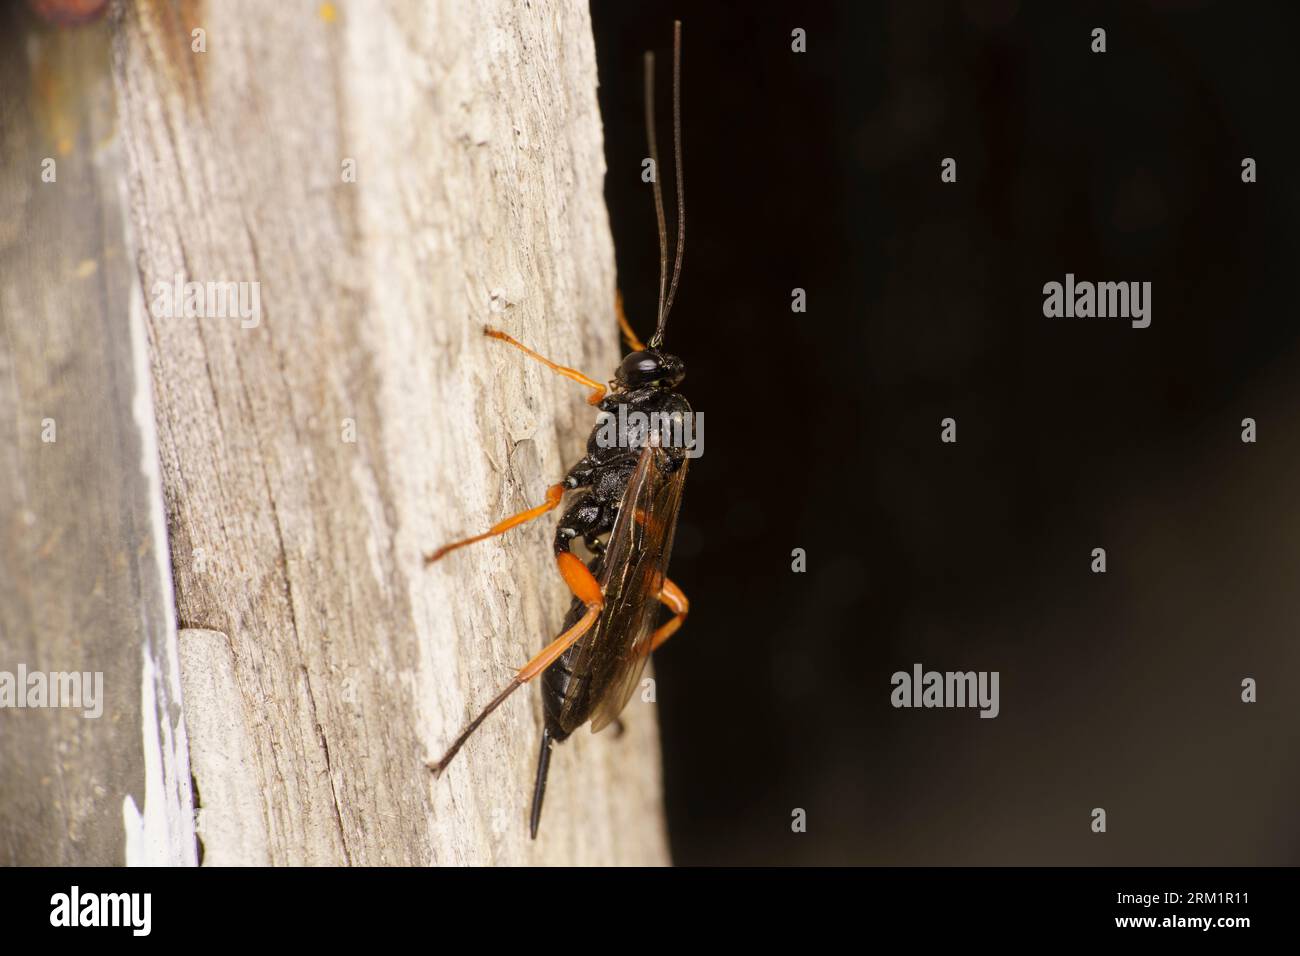 Sirex noctilio Family Siricidae Genus Sirex European woodwasp wild nature insect wallpaper Stock Photo